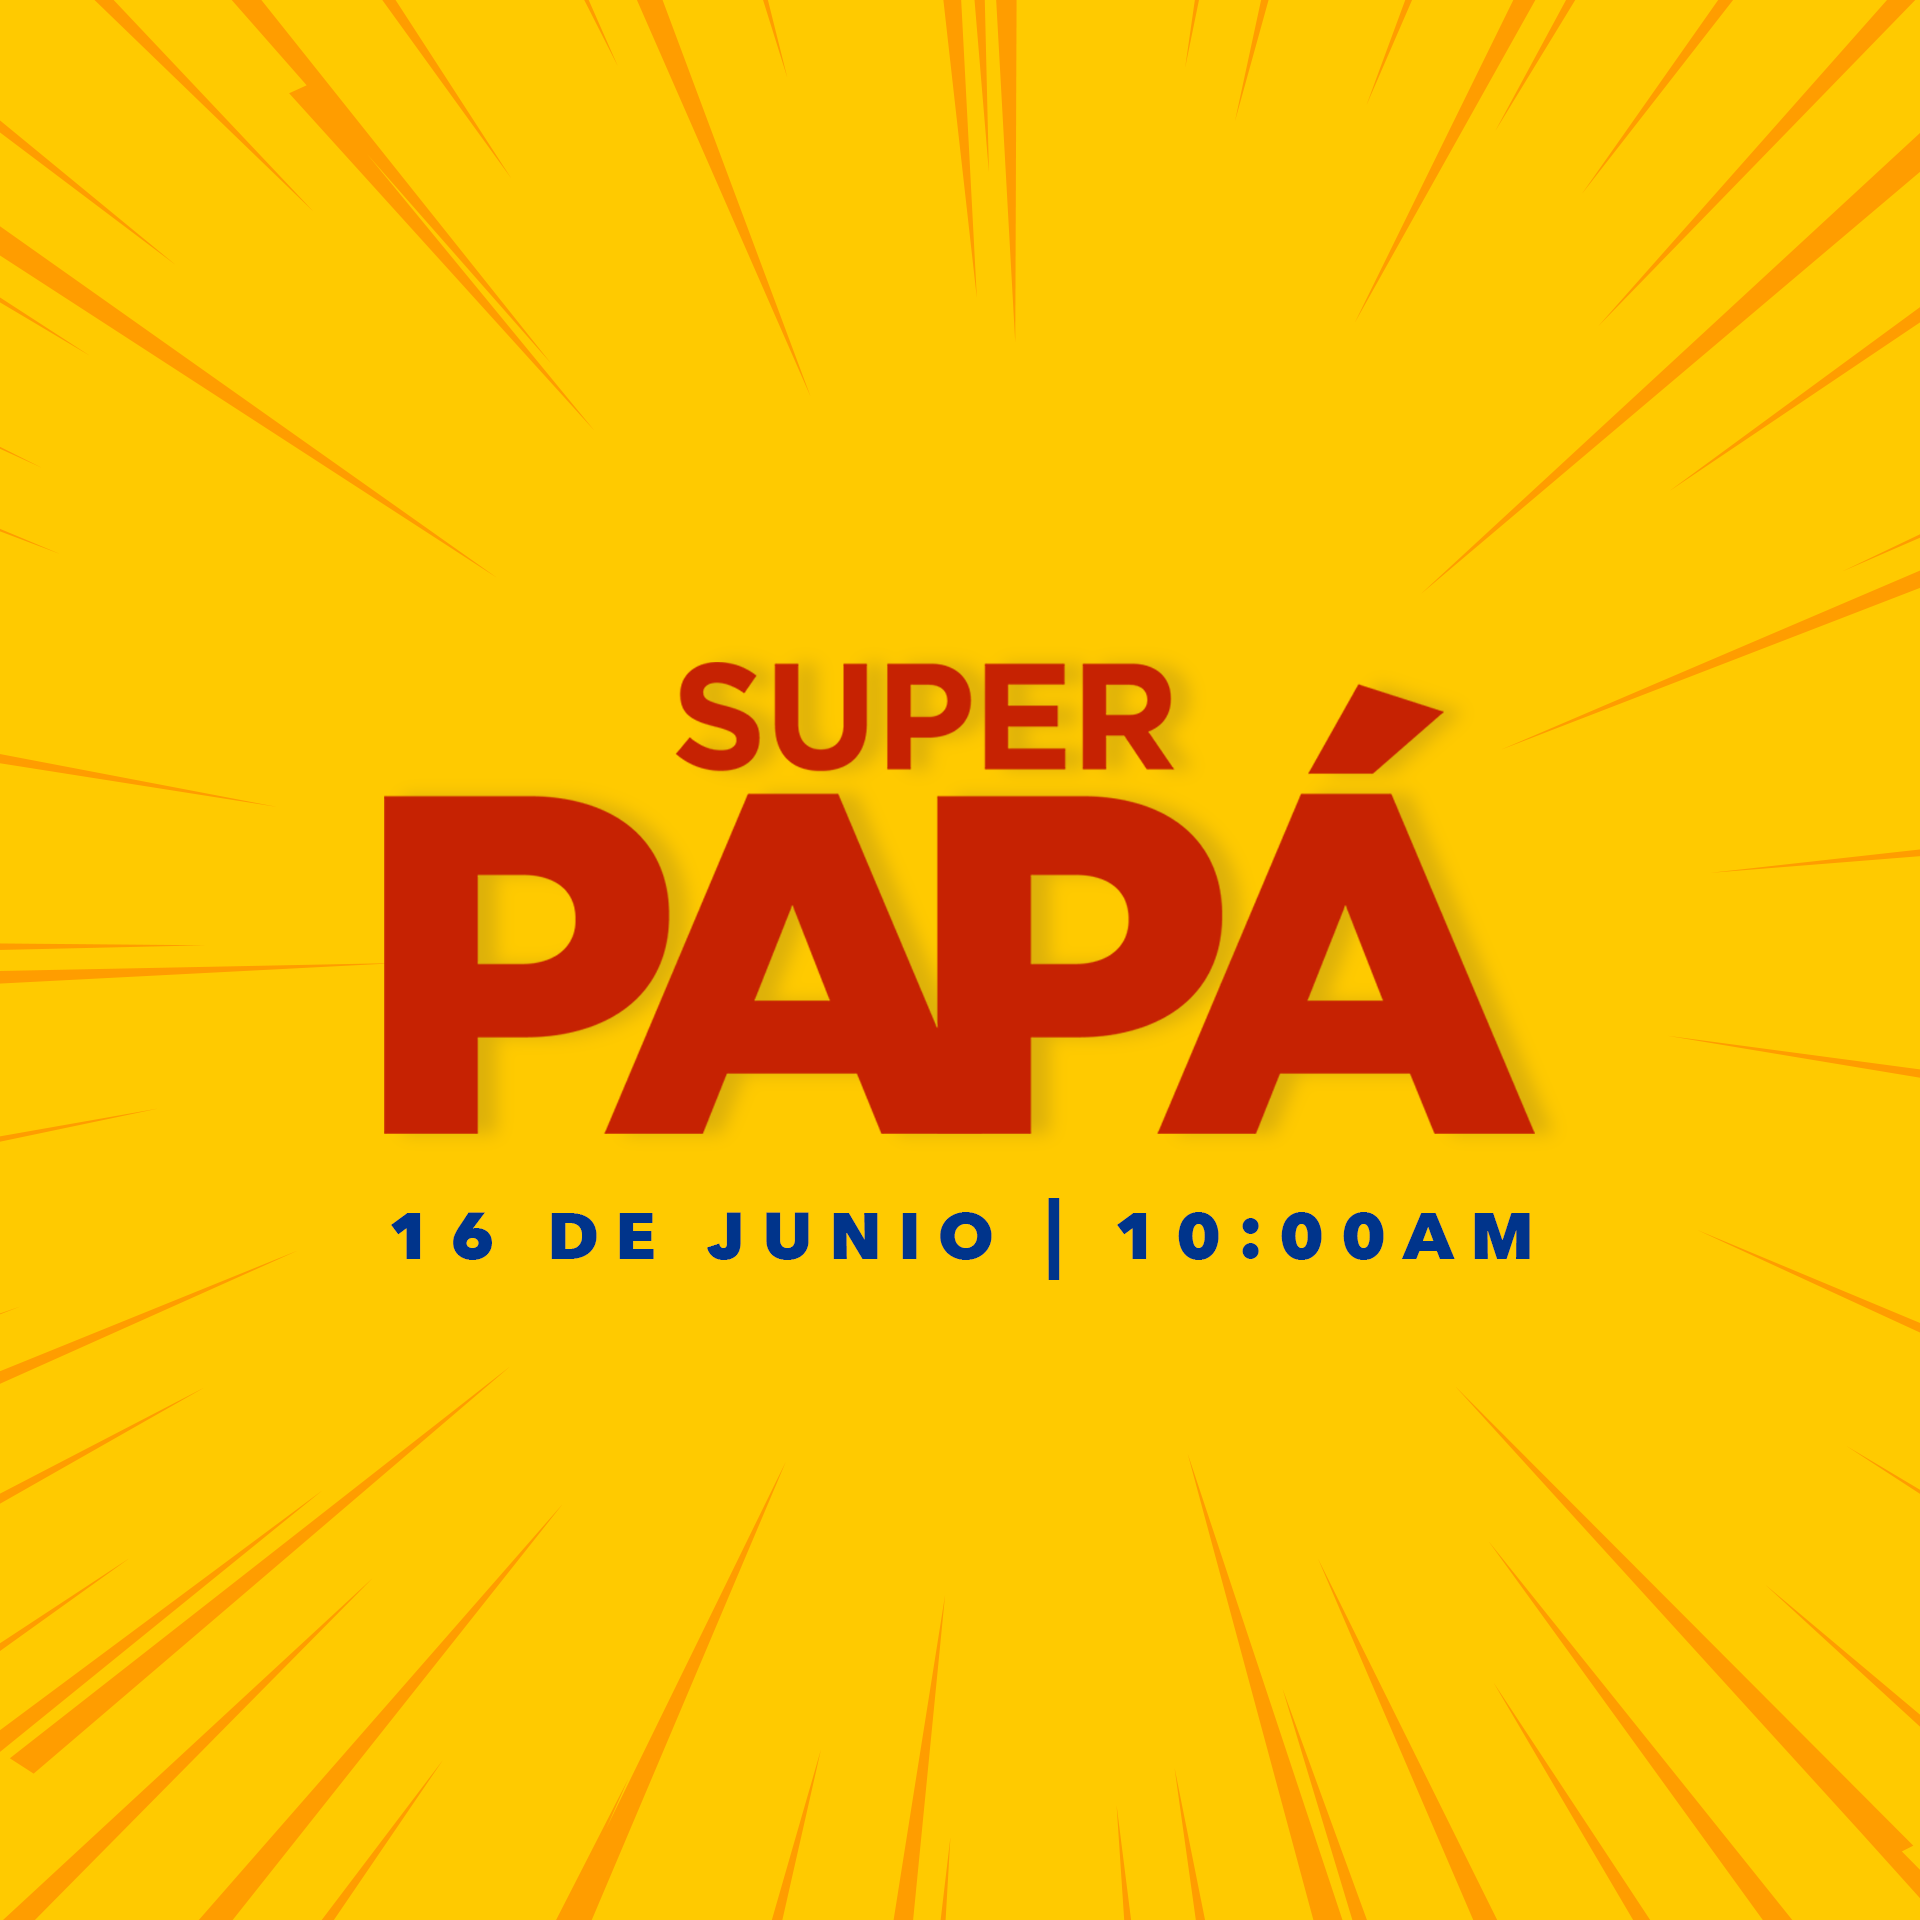 Super Papá - Posts - Social.png